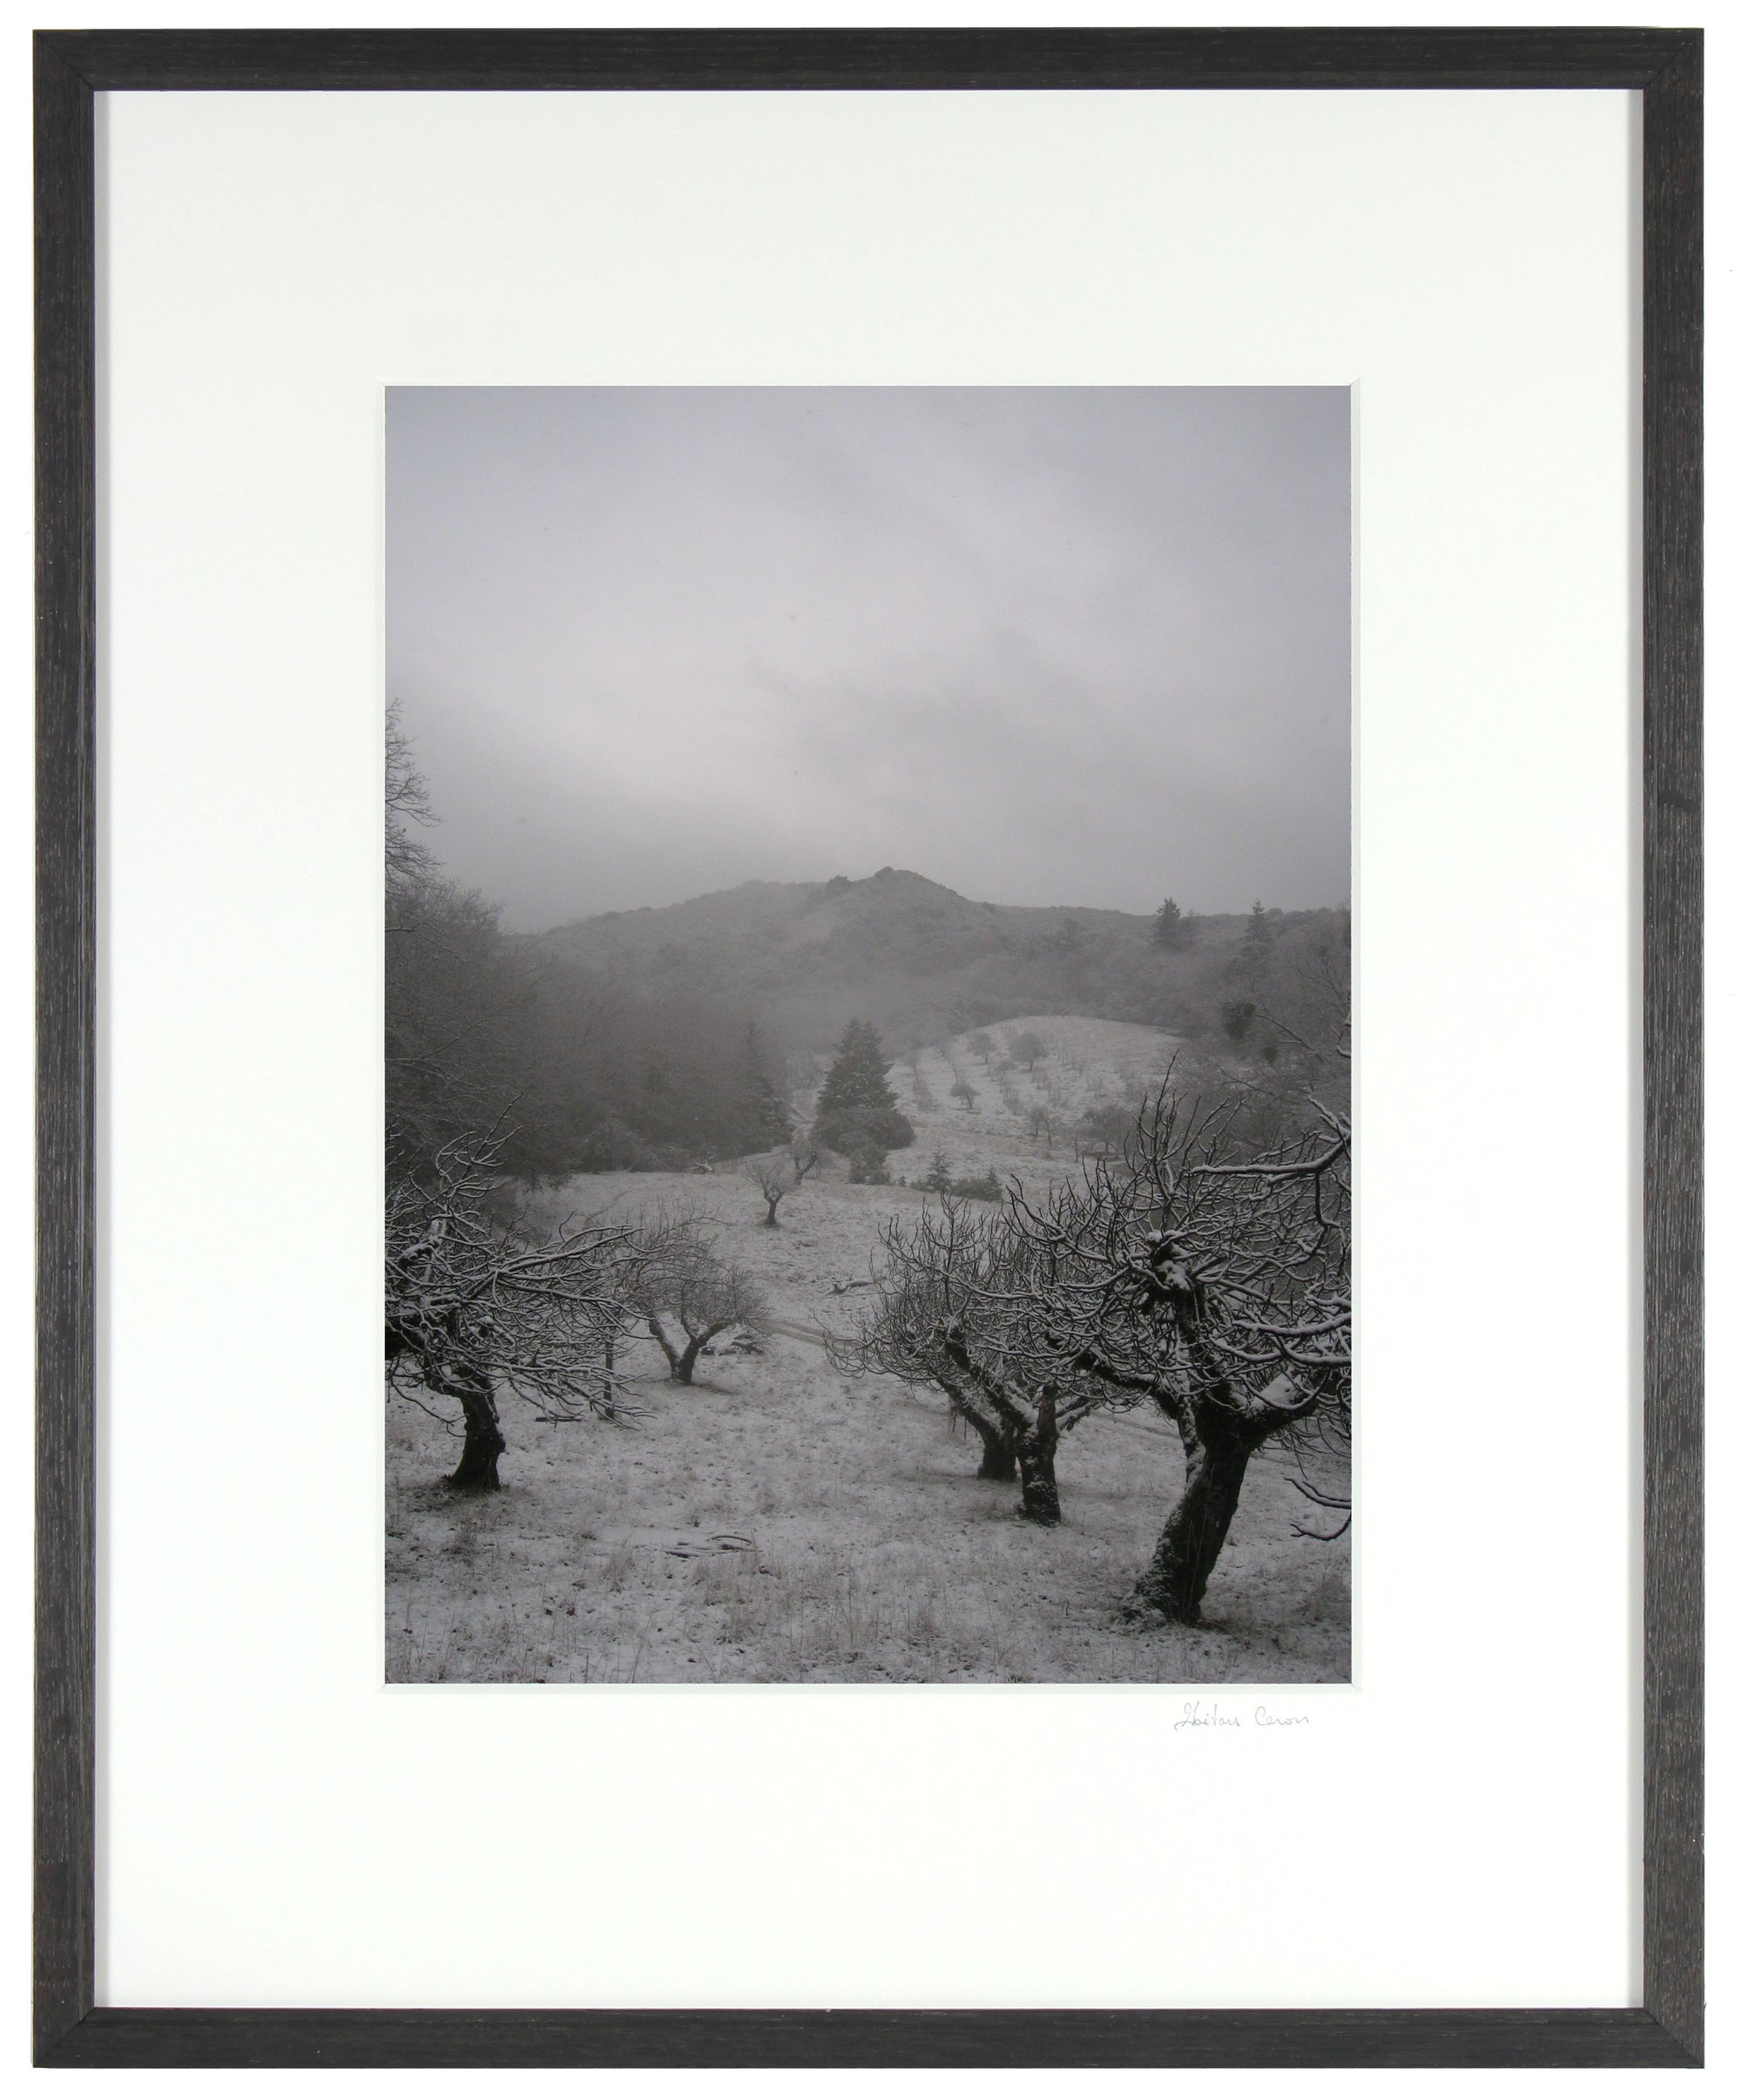 <I>Orchard in Snow</I><br>Mendocino, California, 2010<br><br>GC0016